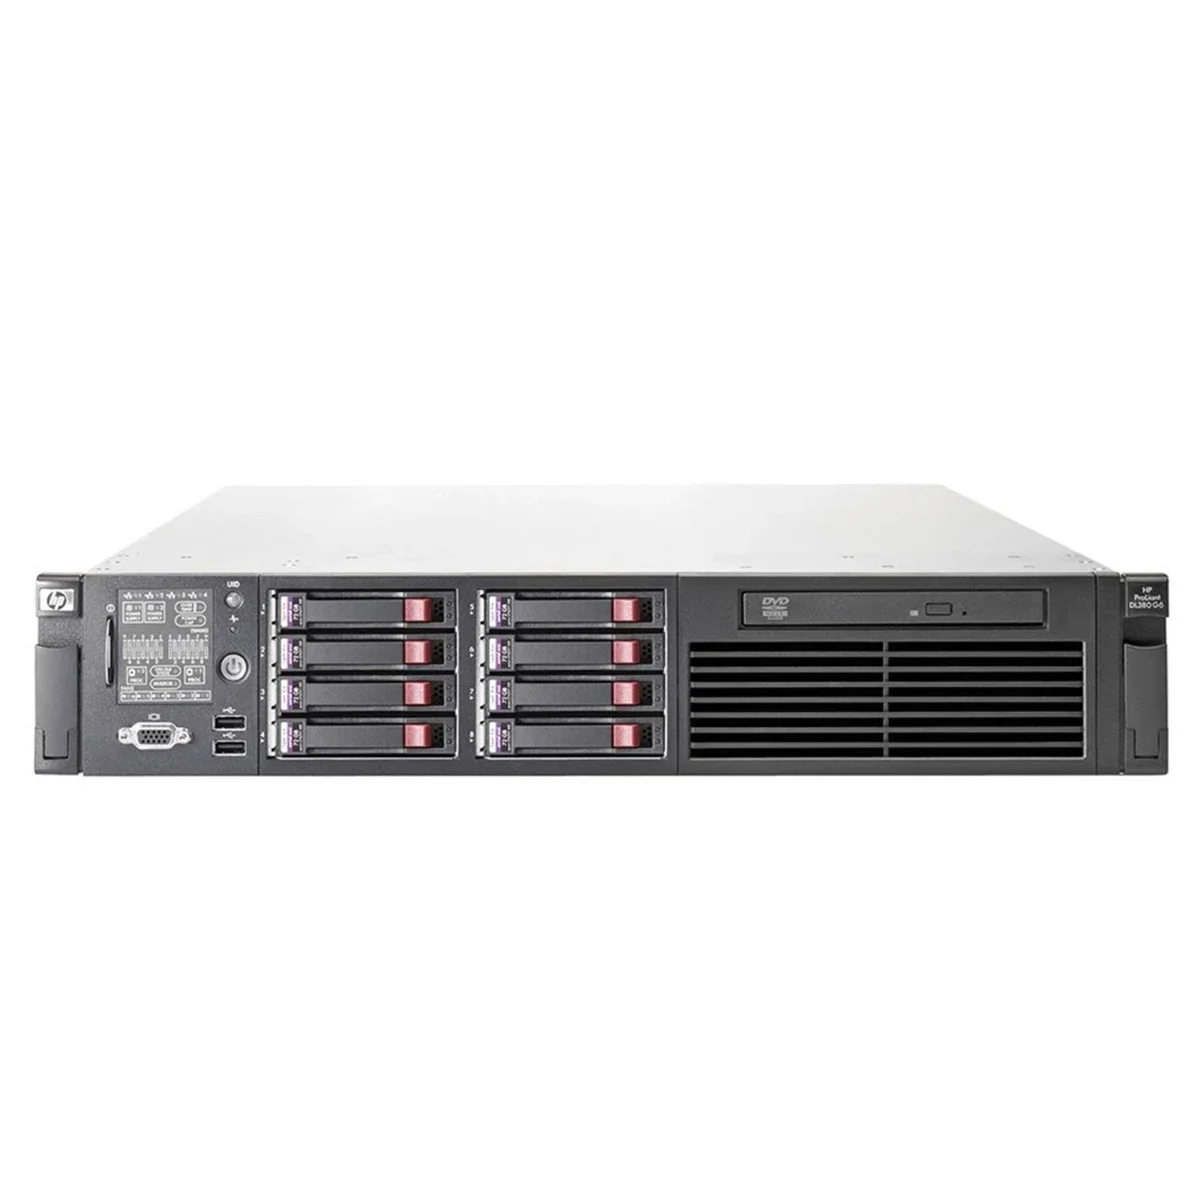 HPE ProLiant DL380 G6 2U Rack Server